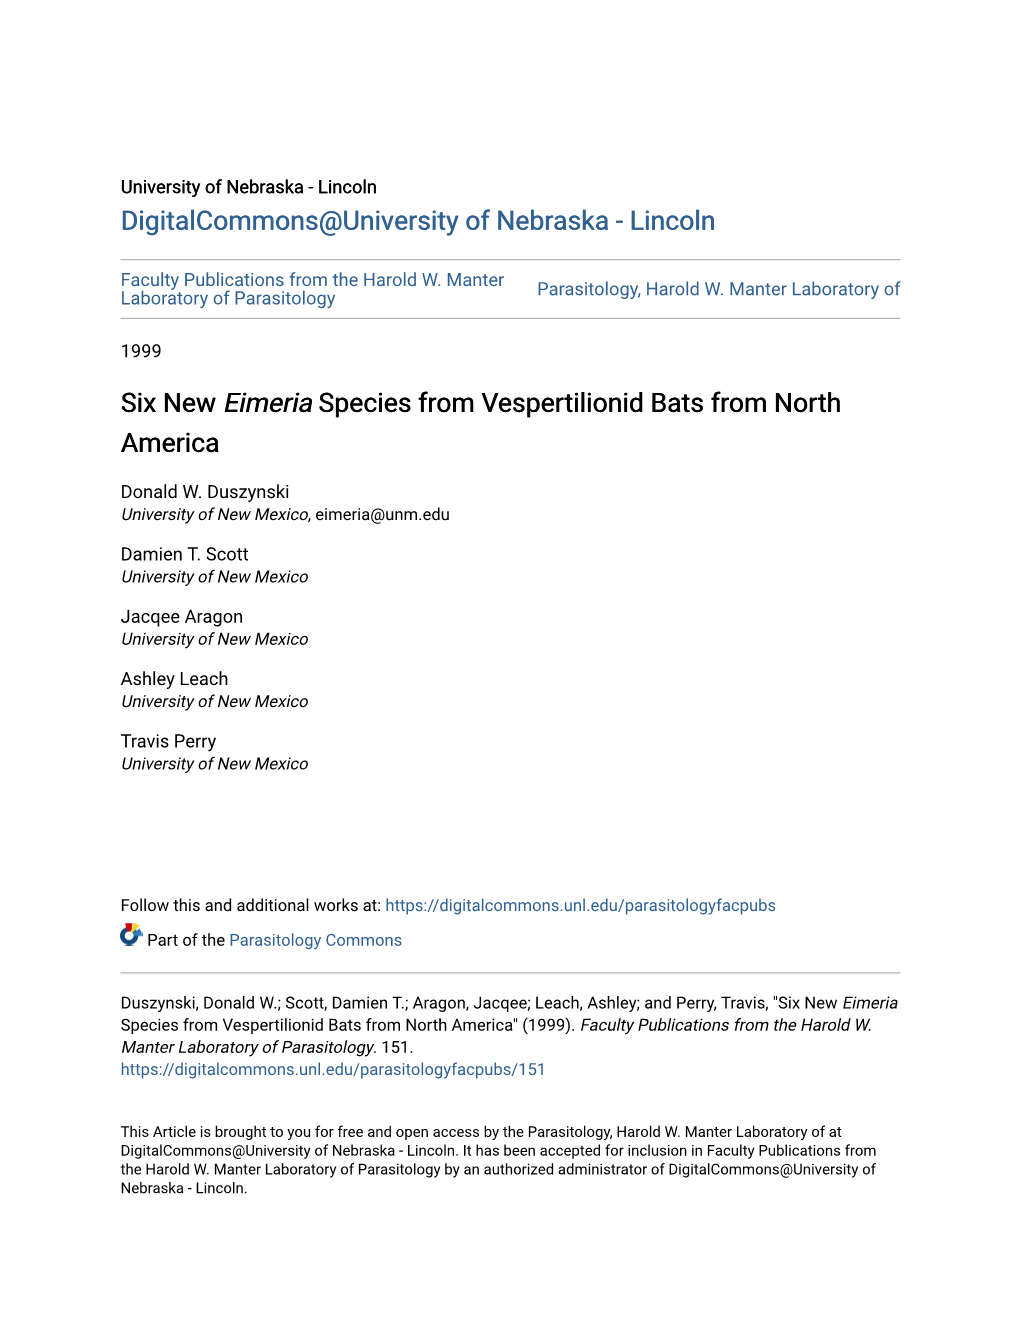 Six New Eimeria Species from Vespertilionid Bats from North America